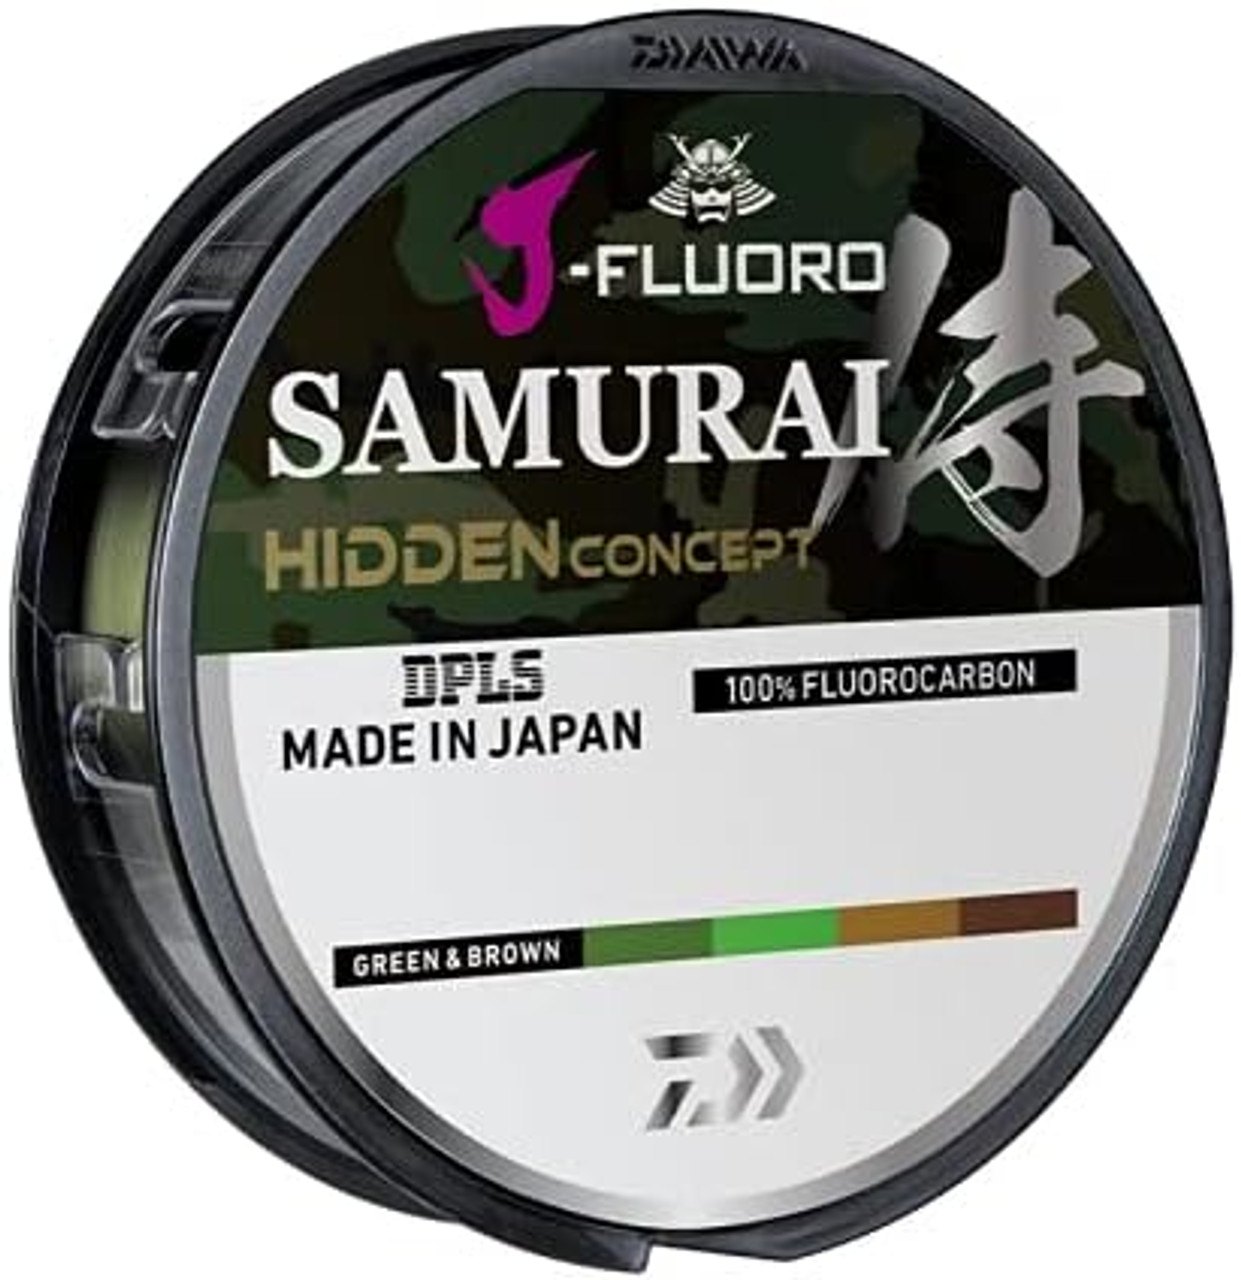 Daiwa J-Fluoro Samurai Hidden Concept Fluorocarbon Fishing Line 14Lb, 220Yd